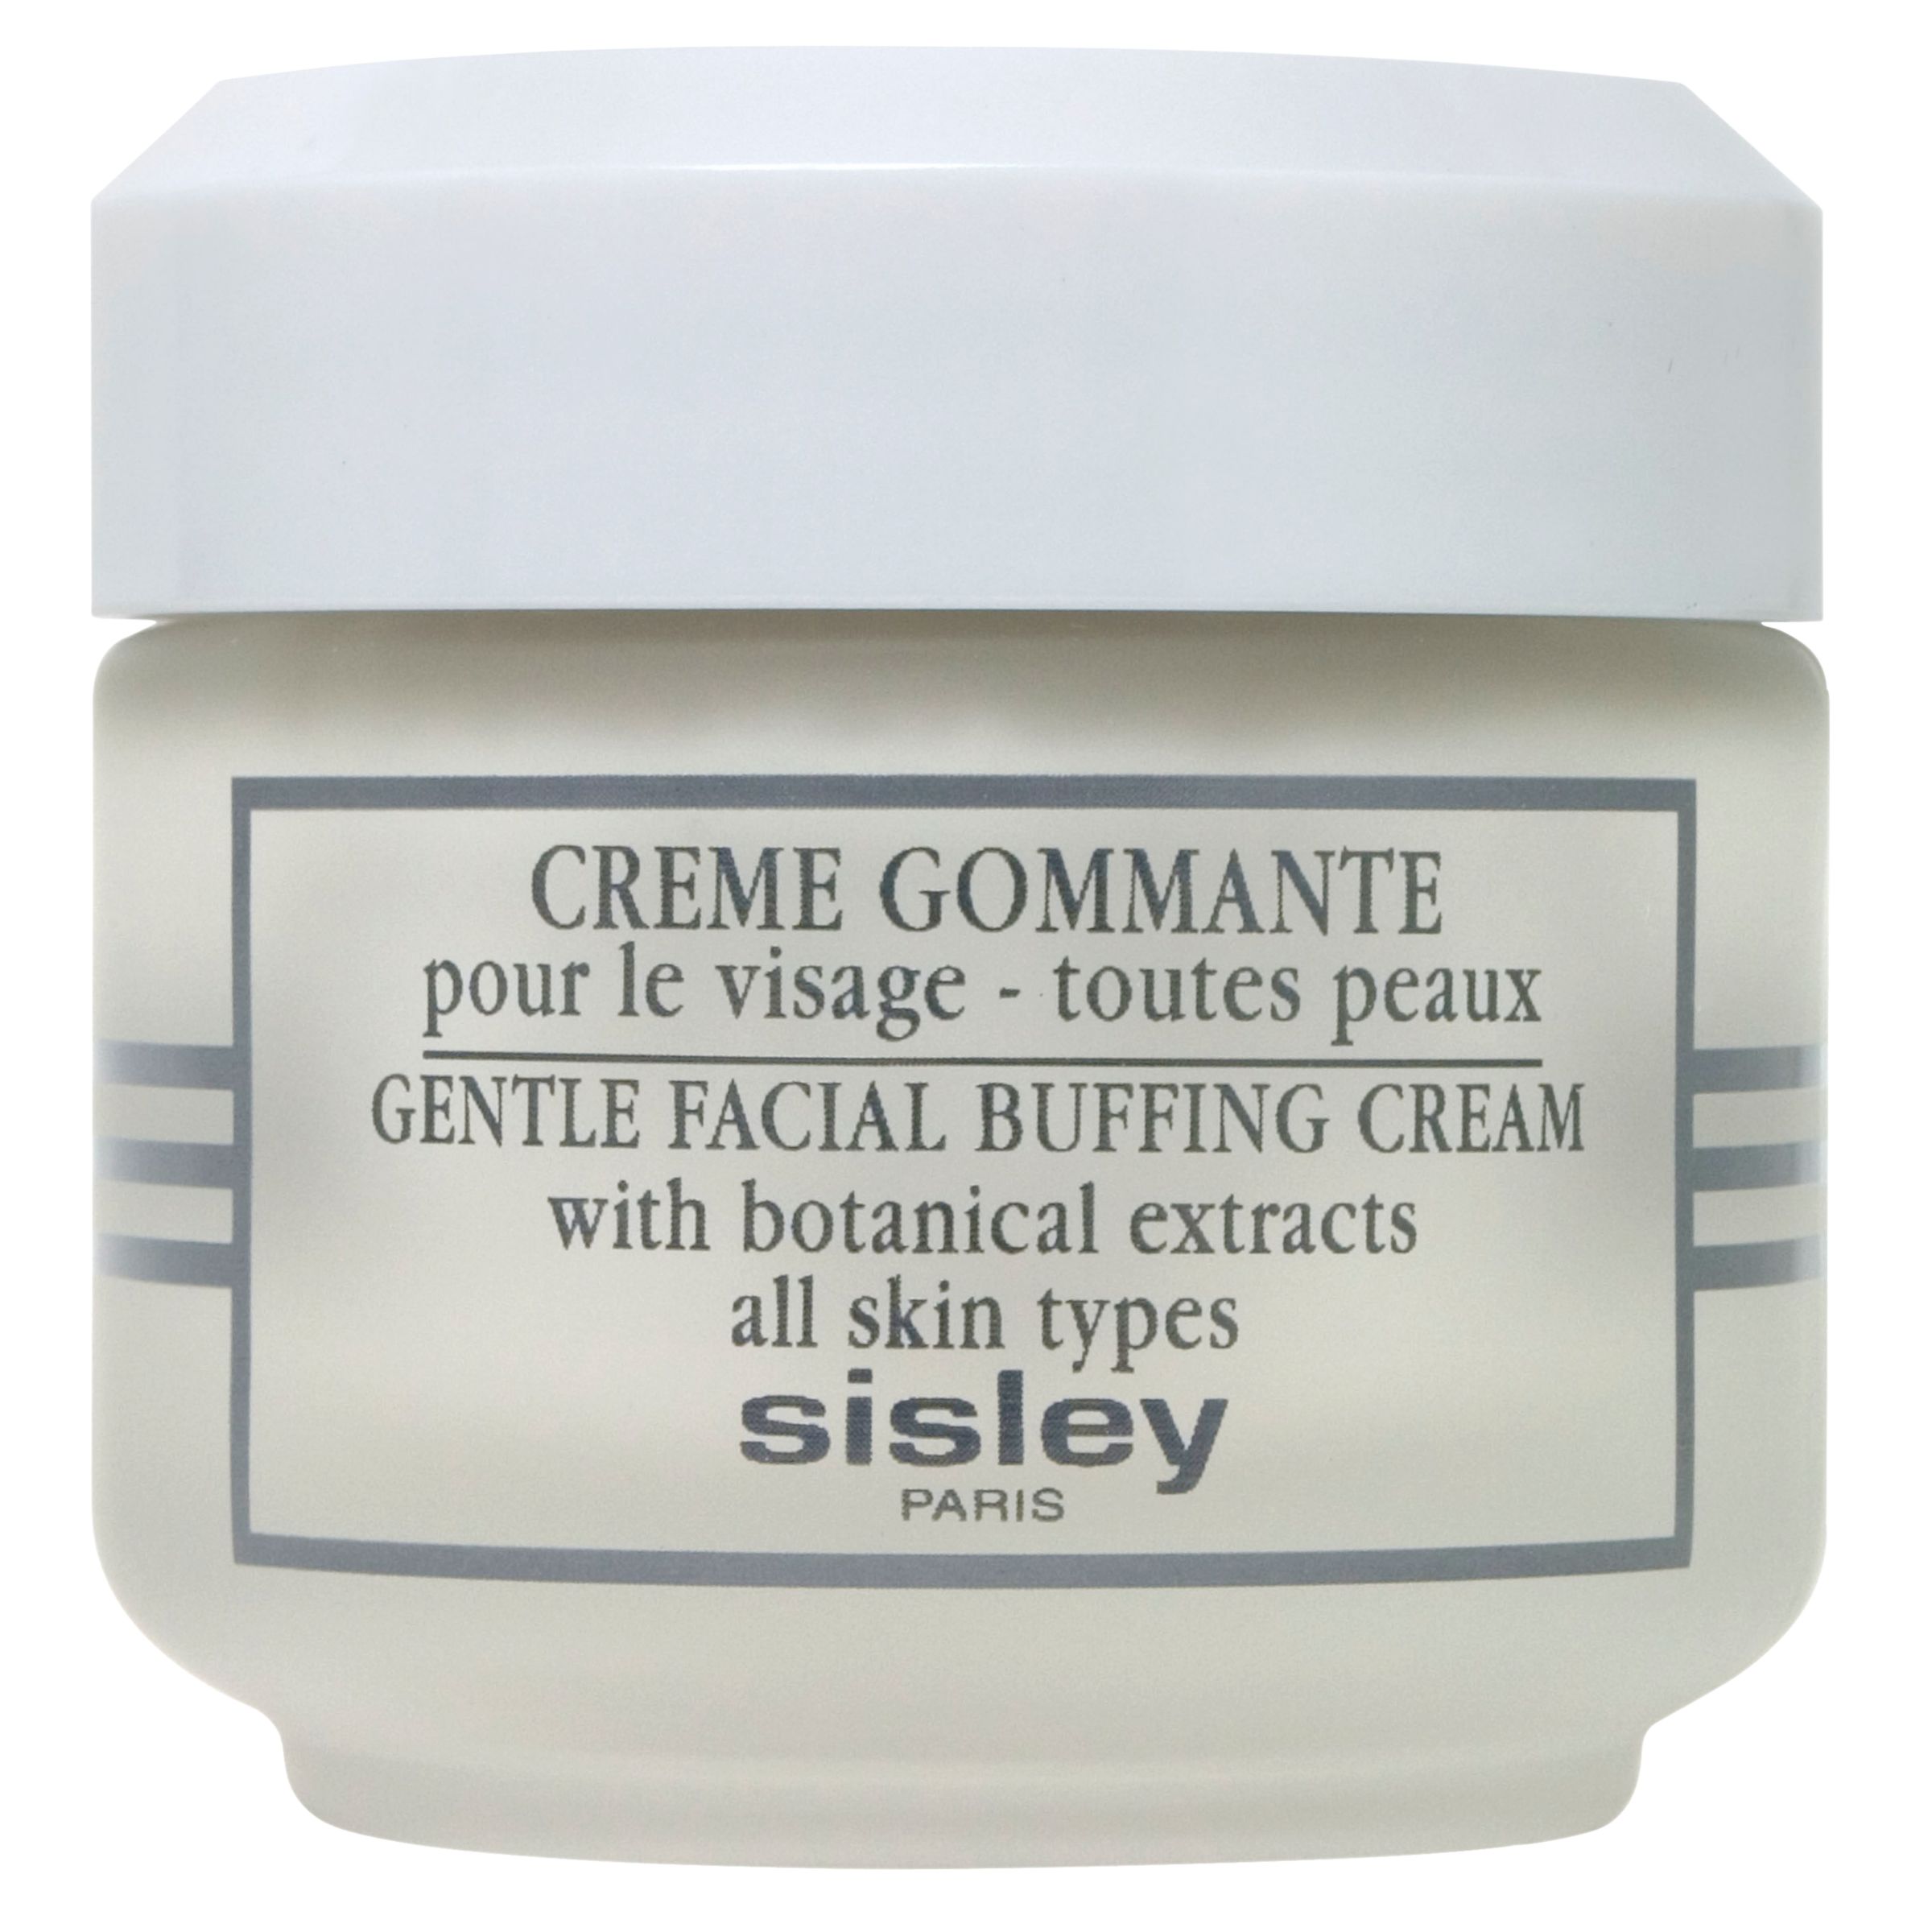 Buffing Gentle Facial Sisley Cream, 50ml